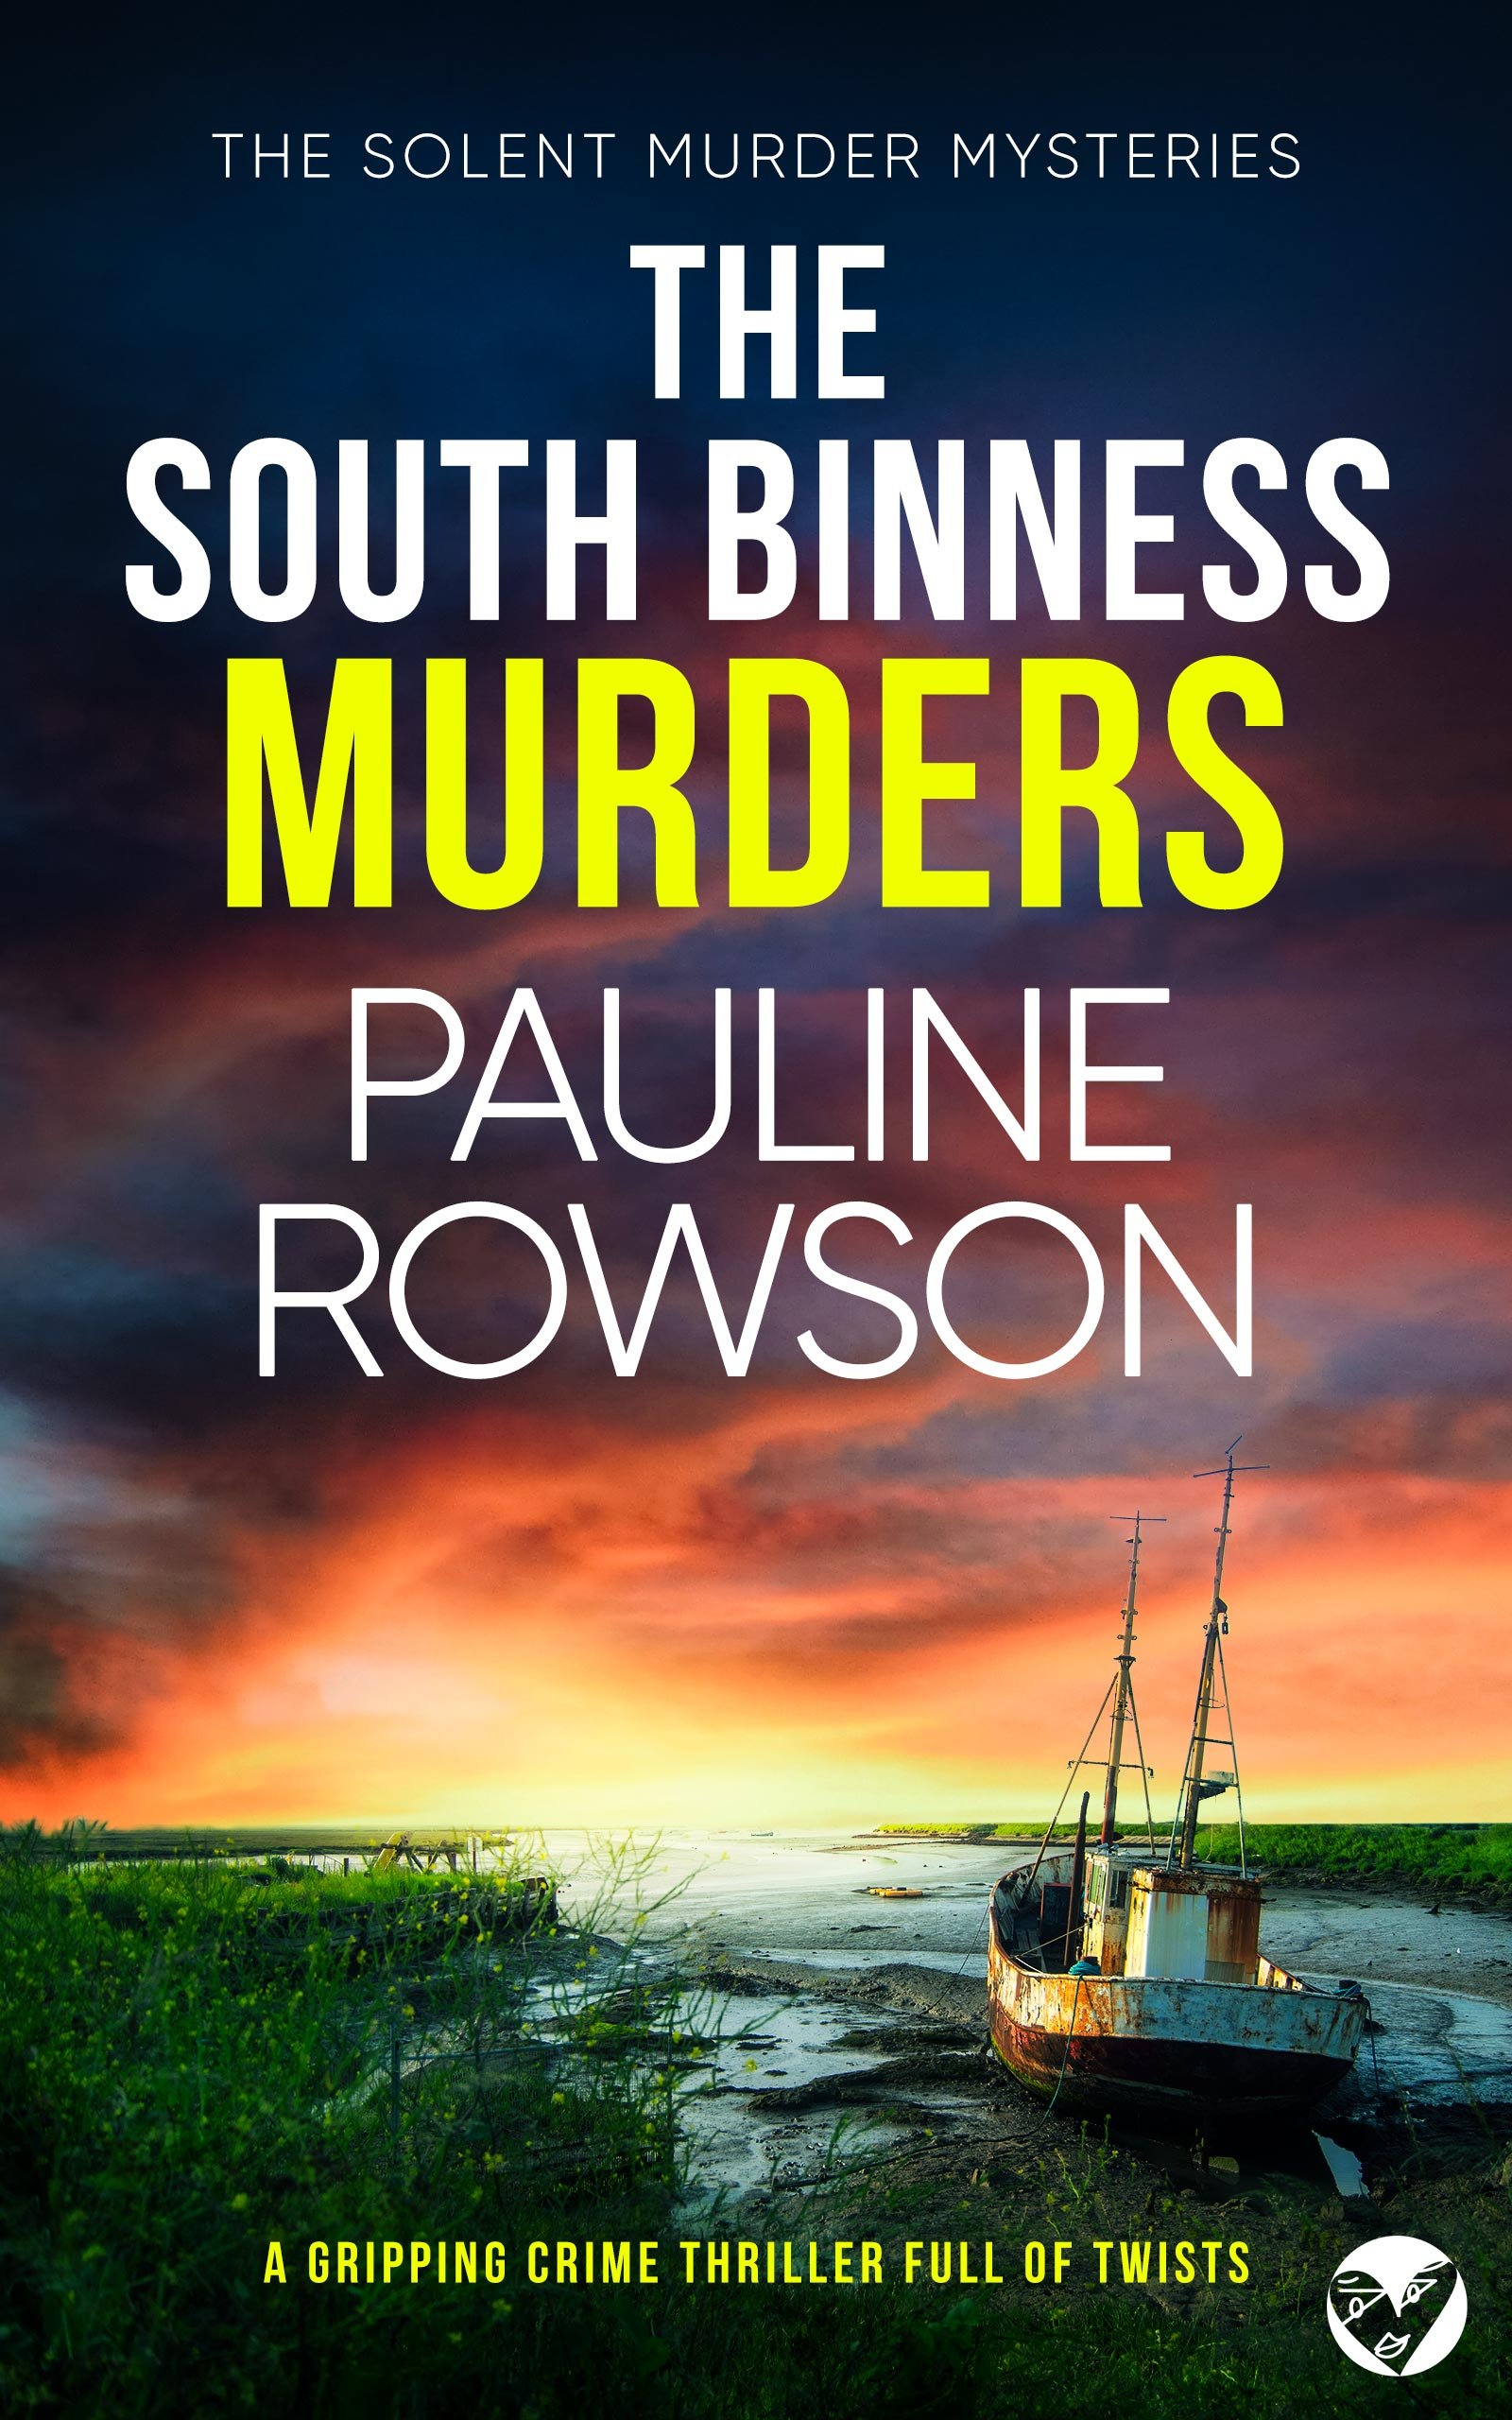 THE SOUTH BINNESS MURDERS Cover publish 459KB.jpg